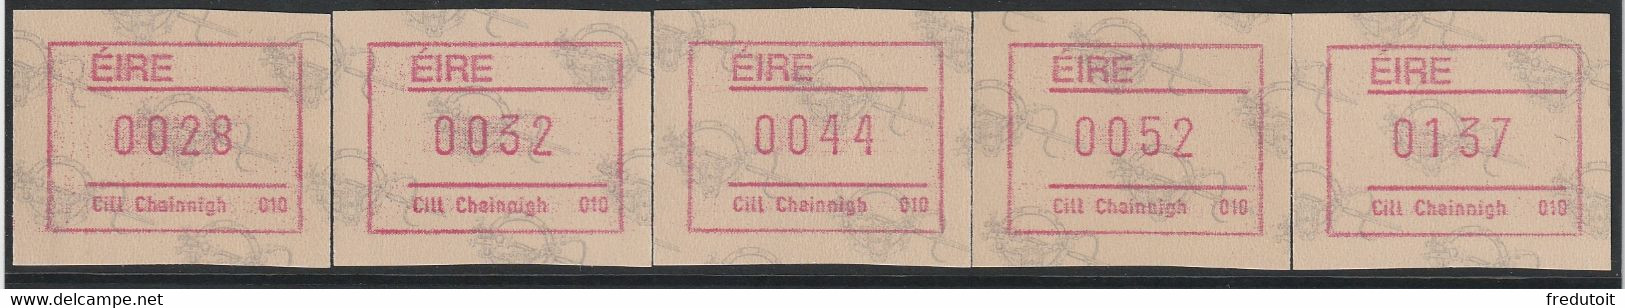 IRLANDE - Timbres Distributeurs / FRAMA  ATM - N°4** (1992) Cill Chainnigh 010 - Viñetas De Franqueo (Frama)